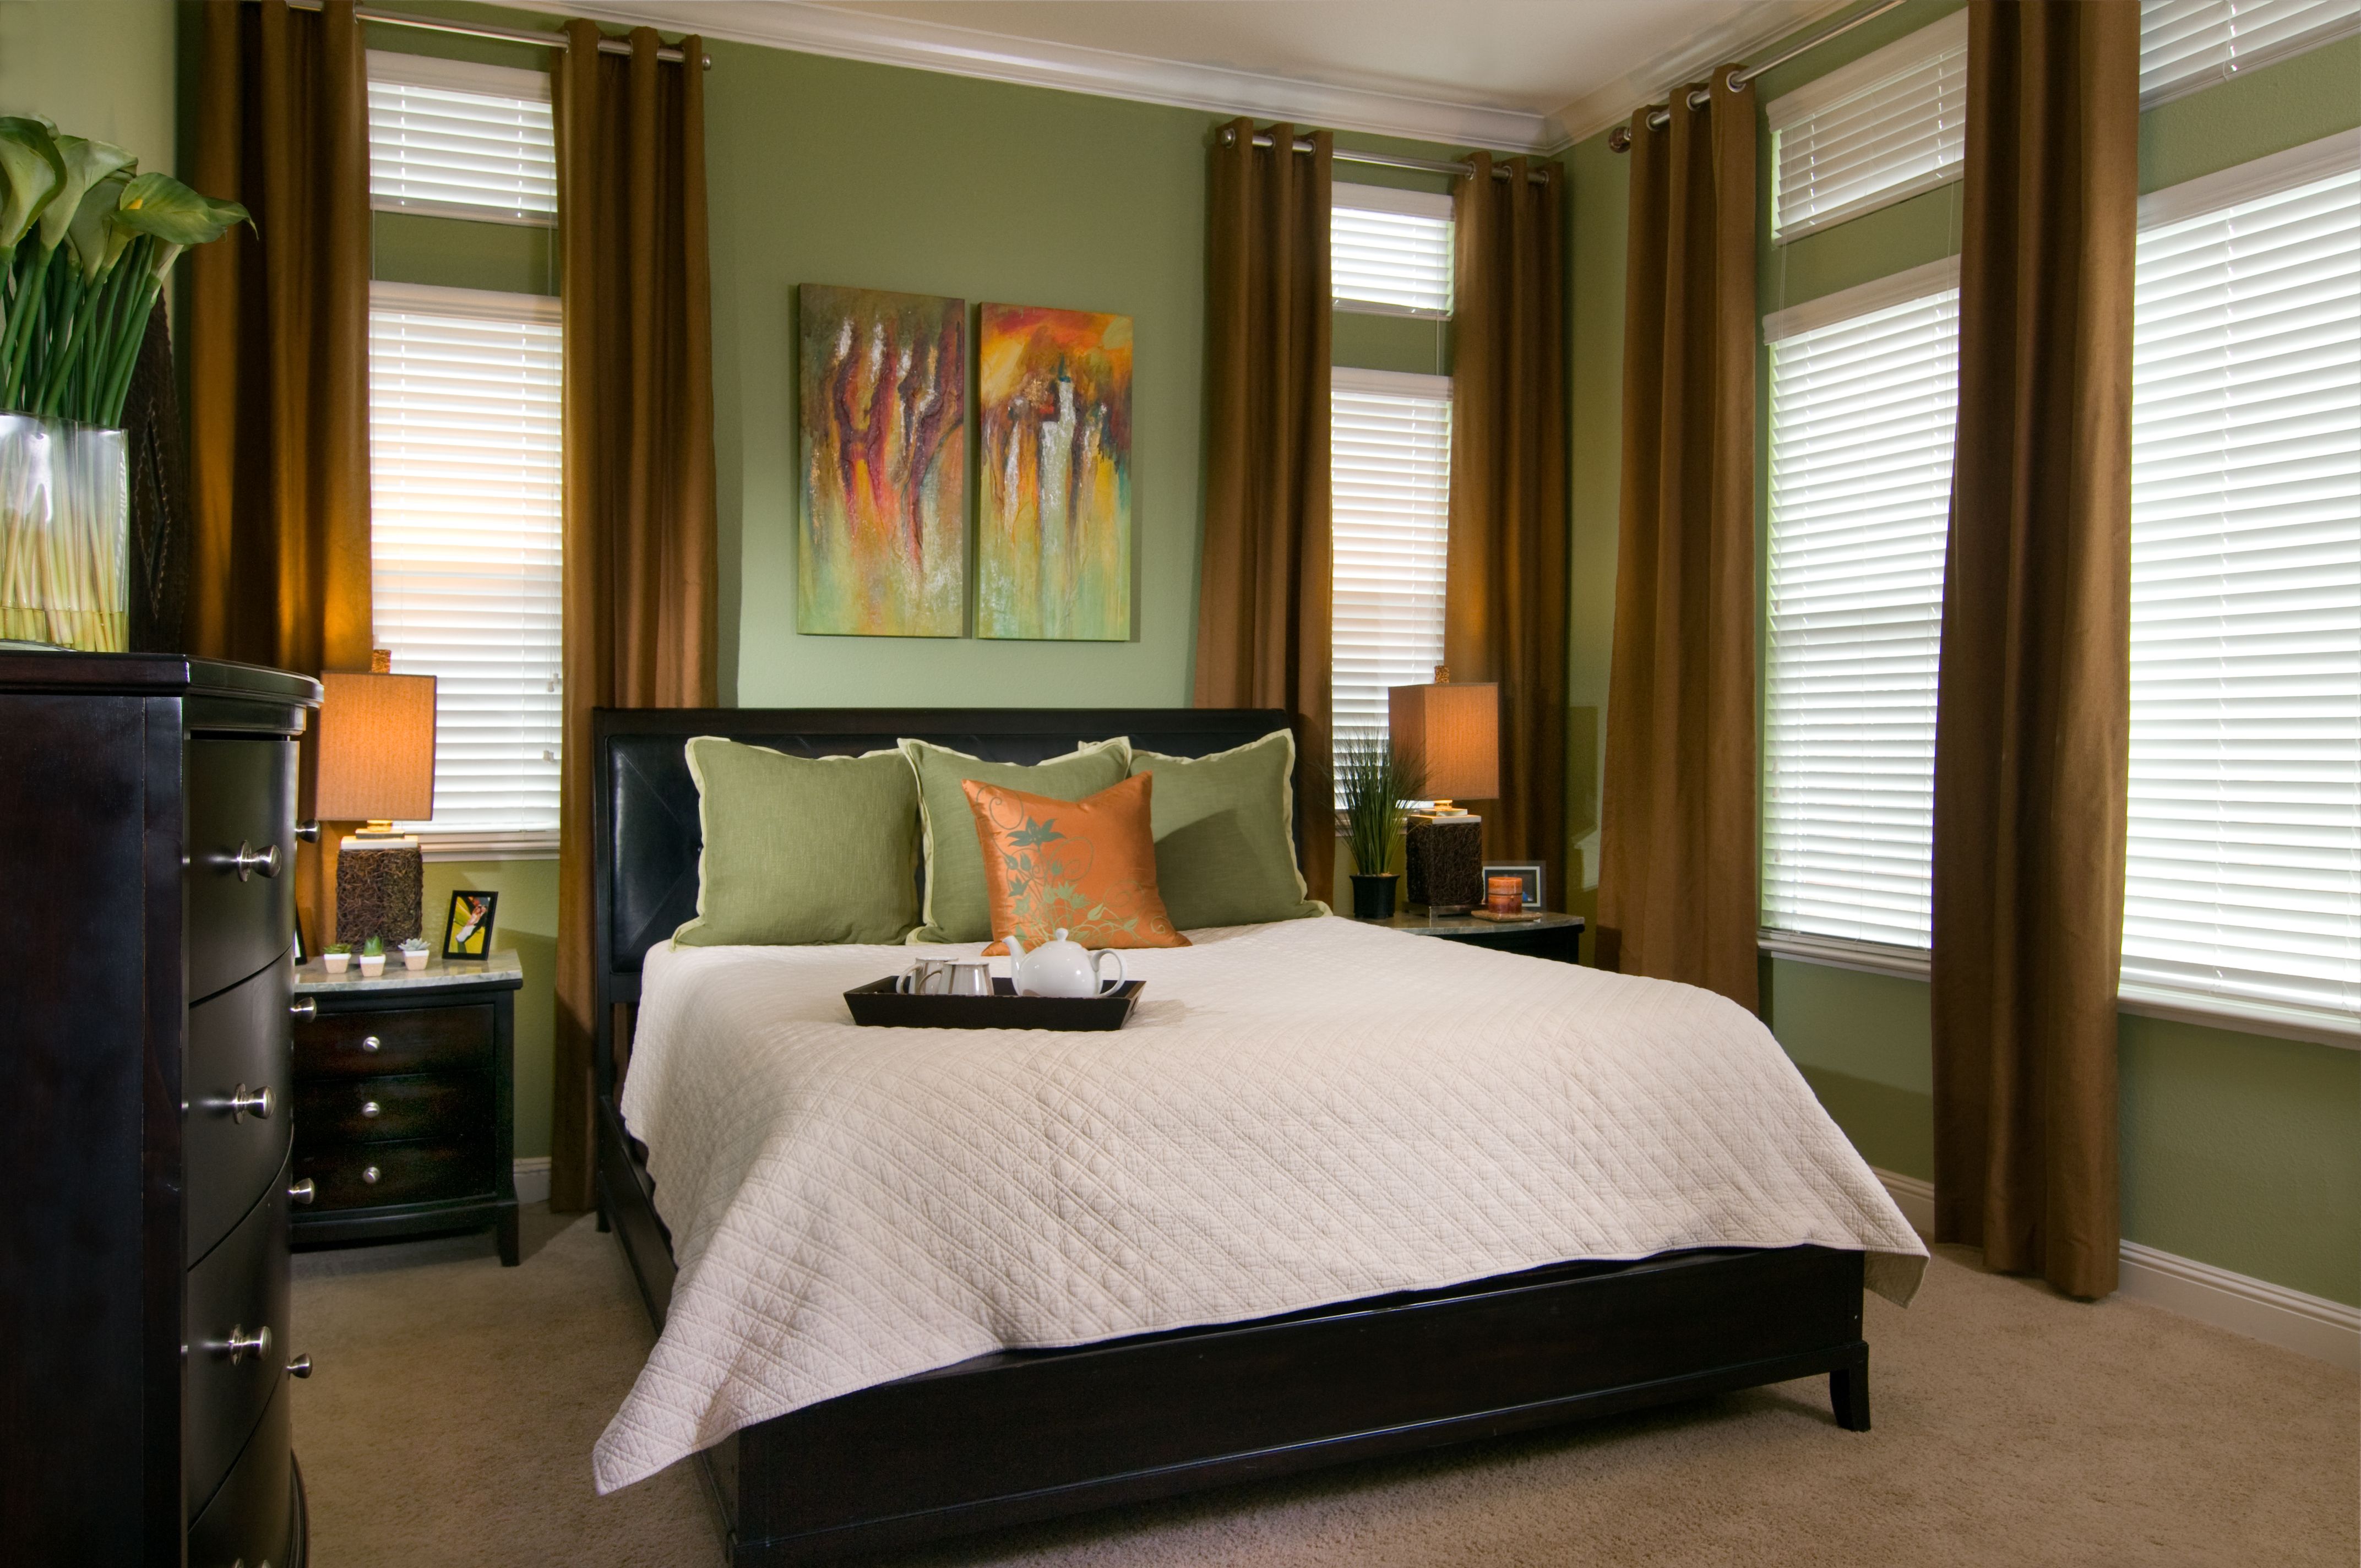 Traditional Beauty of bedroom | Budget Flooring, Inc.